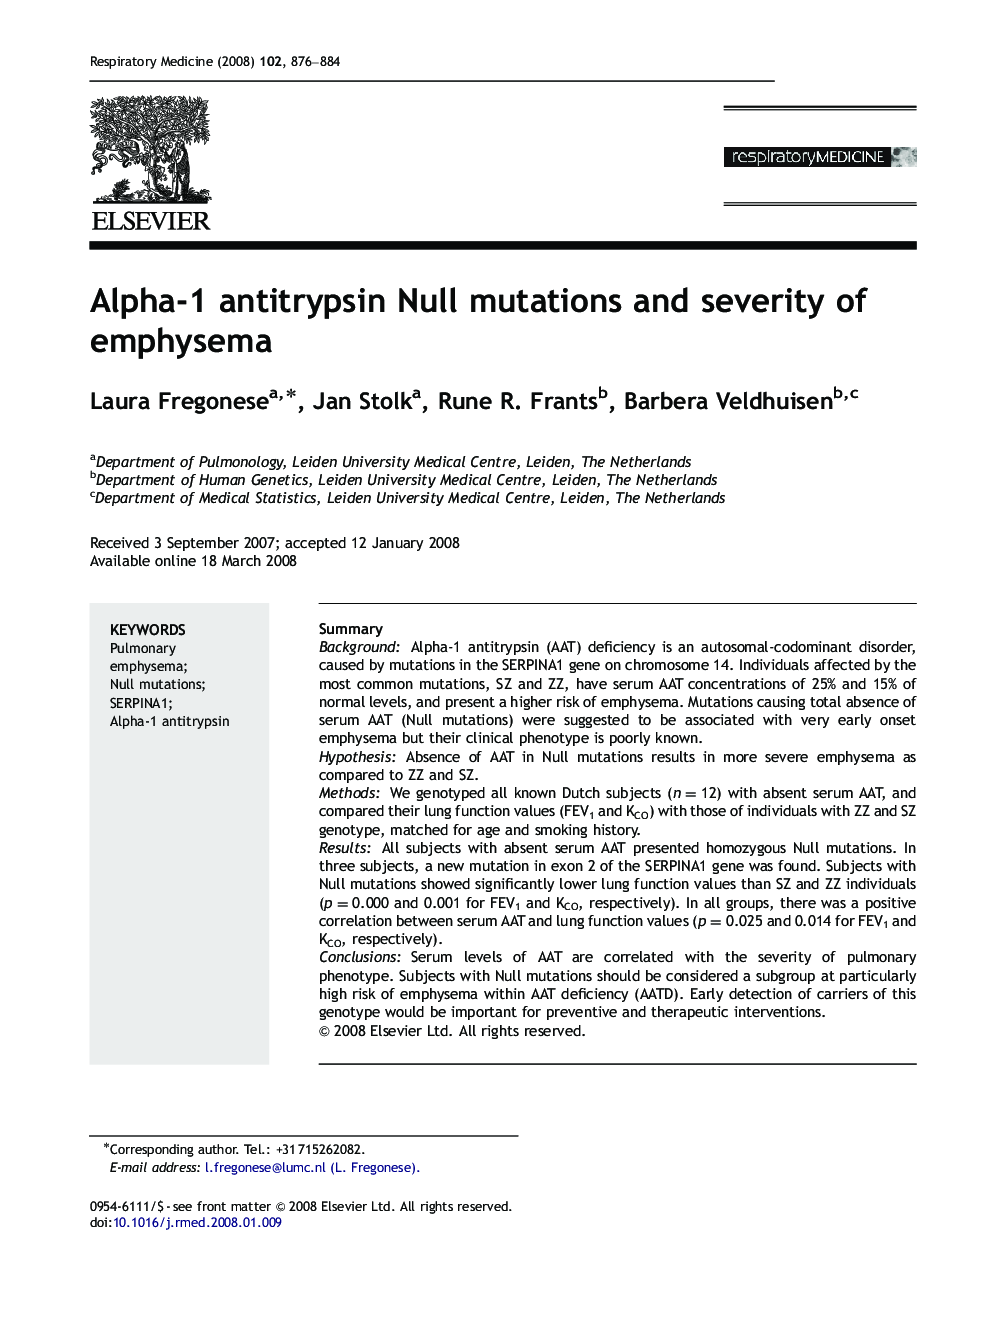 Alpha-1 antitrypsin Null mutations and severity of emphysema